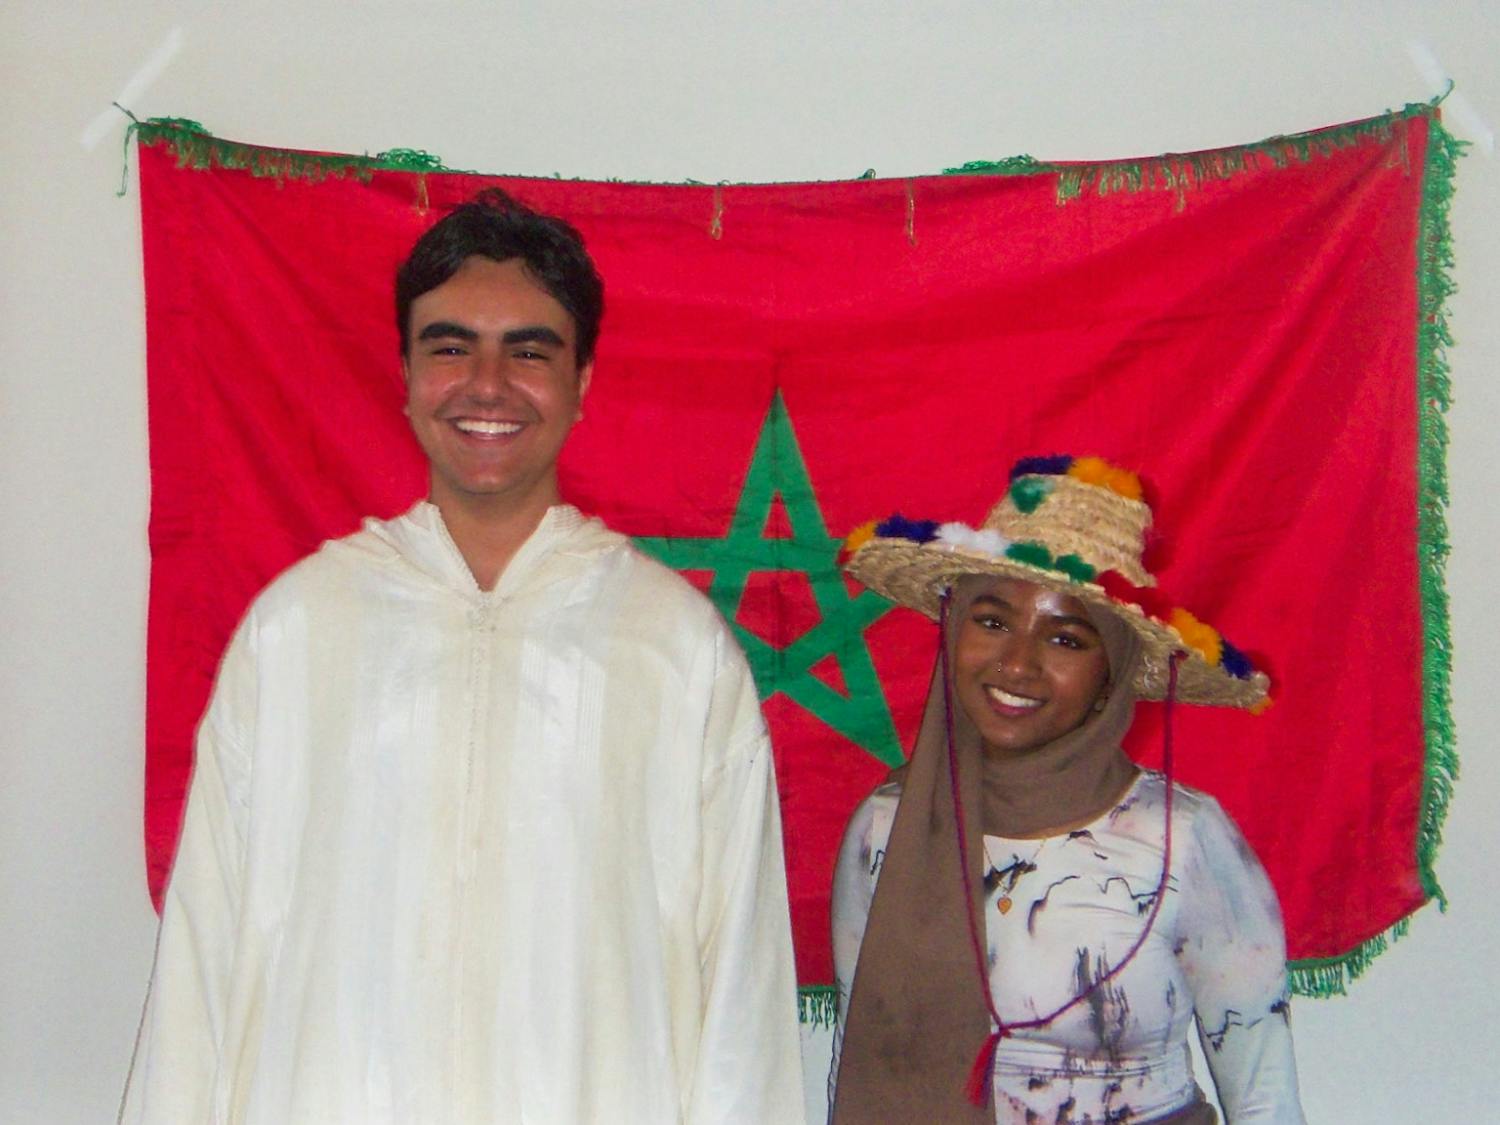 Singh_Morocco Fundraiser_CO_Salma_Eldeeb.jpg